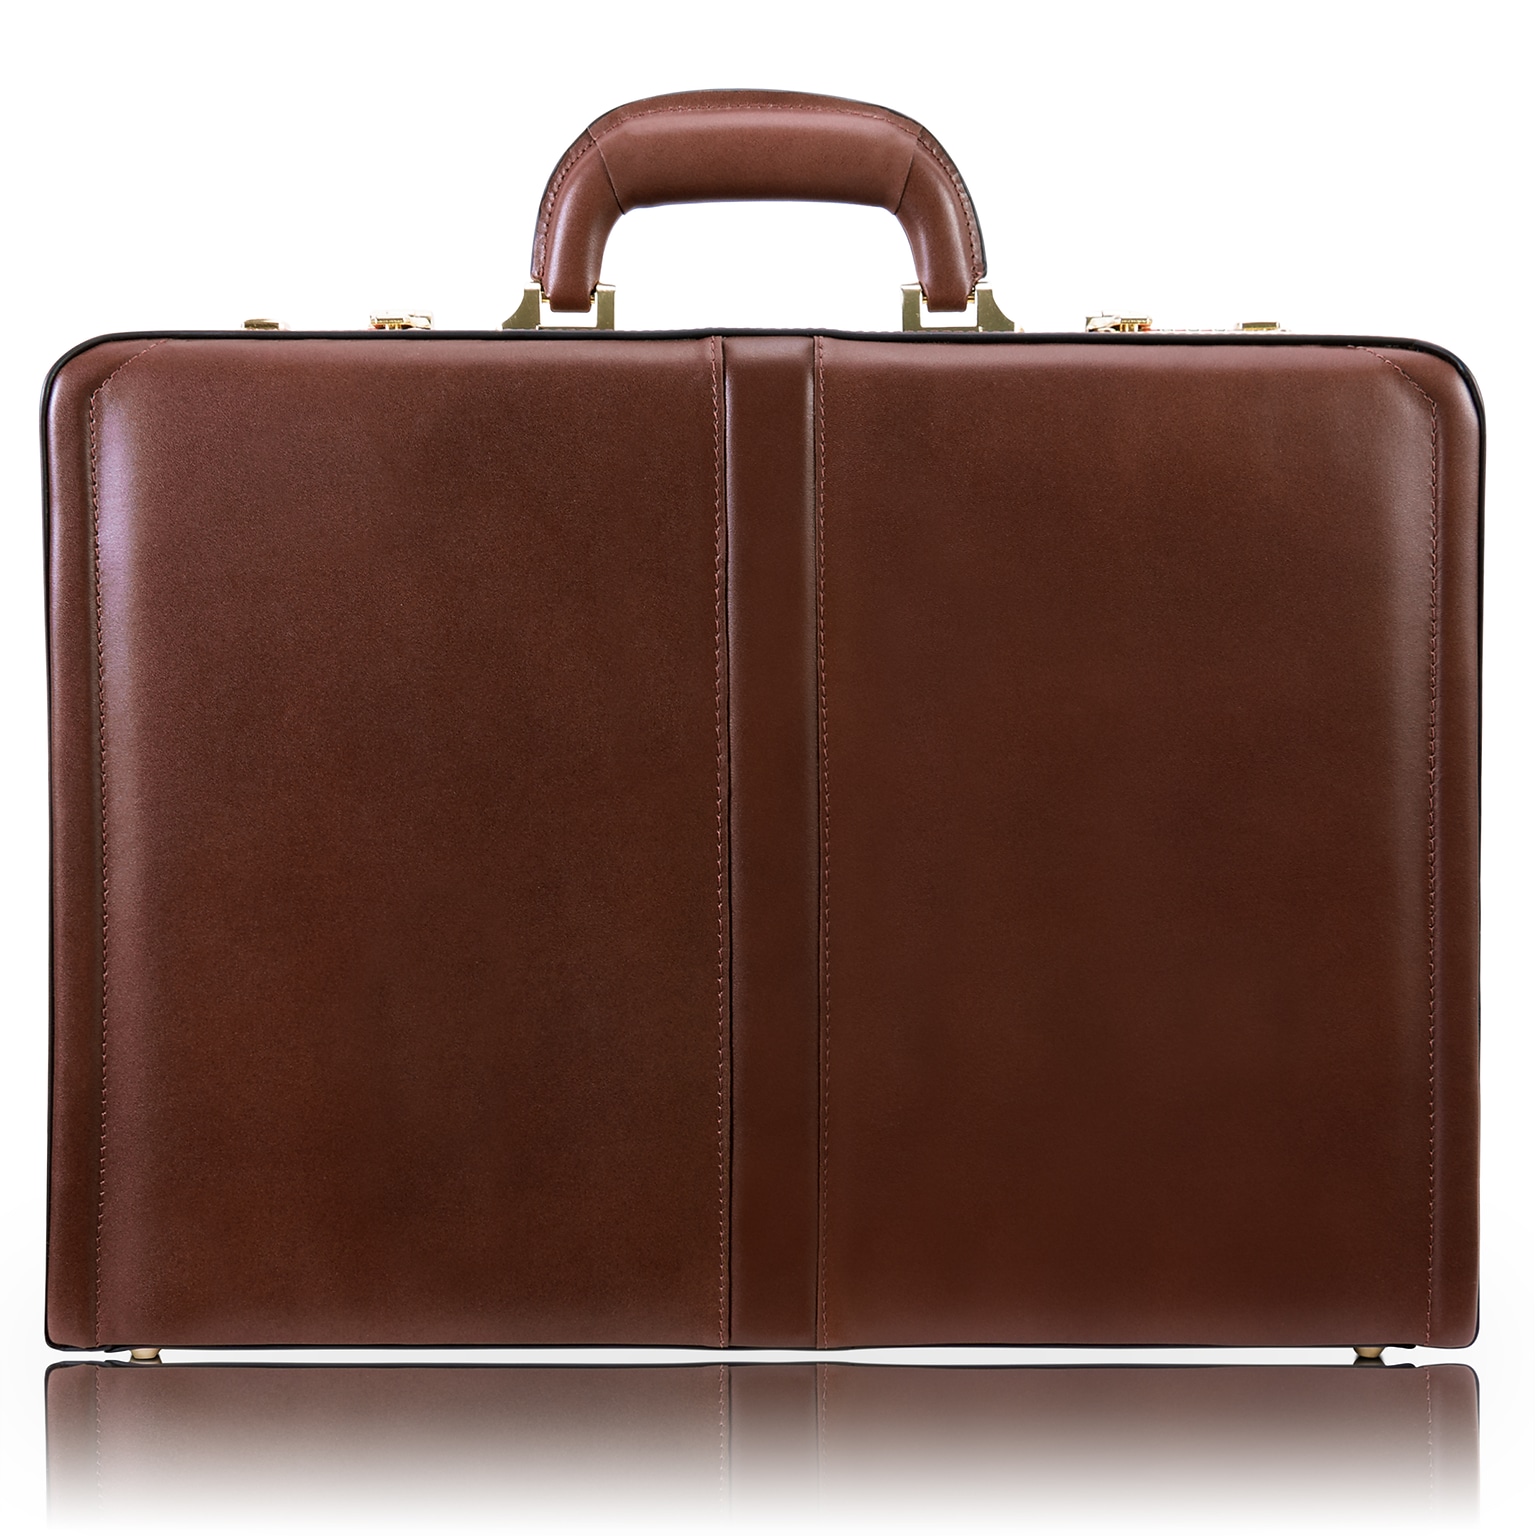 McKlein V Series, REAGAN, Top Grain Cowhide Leather,Attaché Briefcase, Brown (80444)